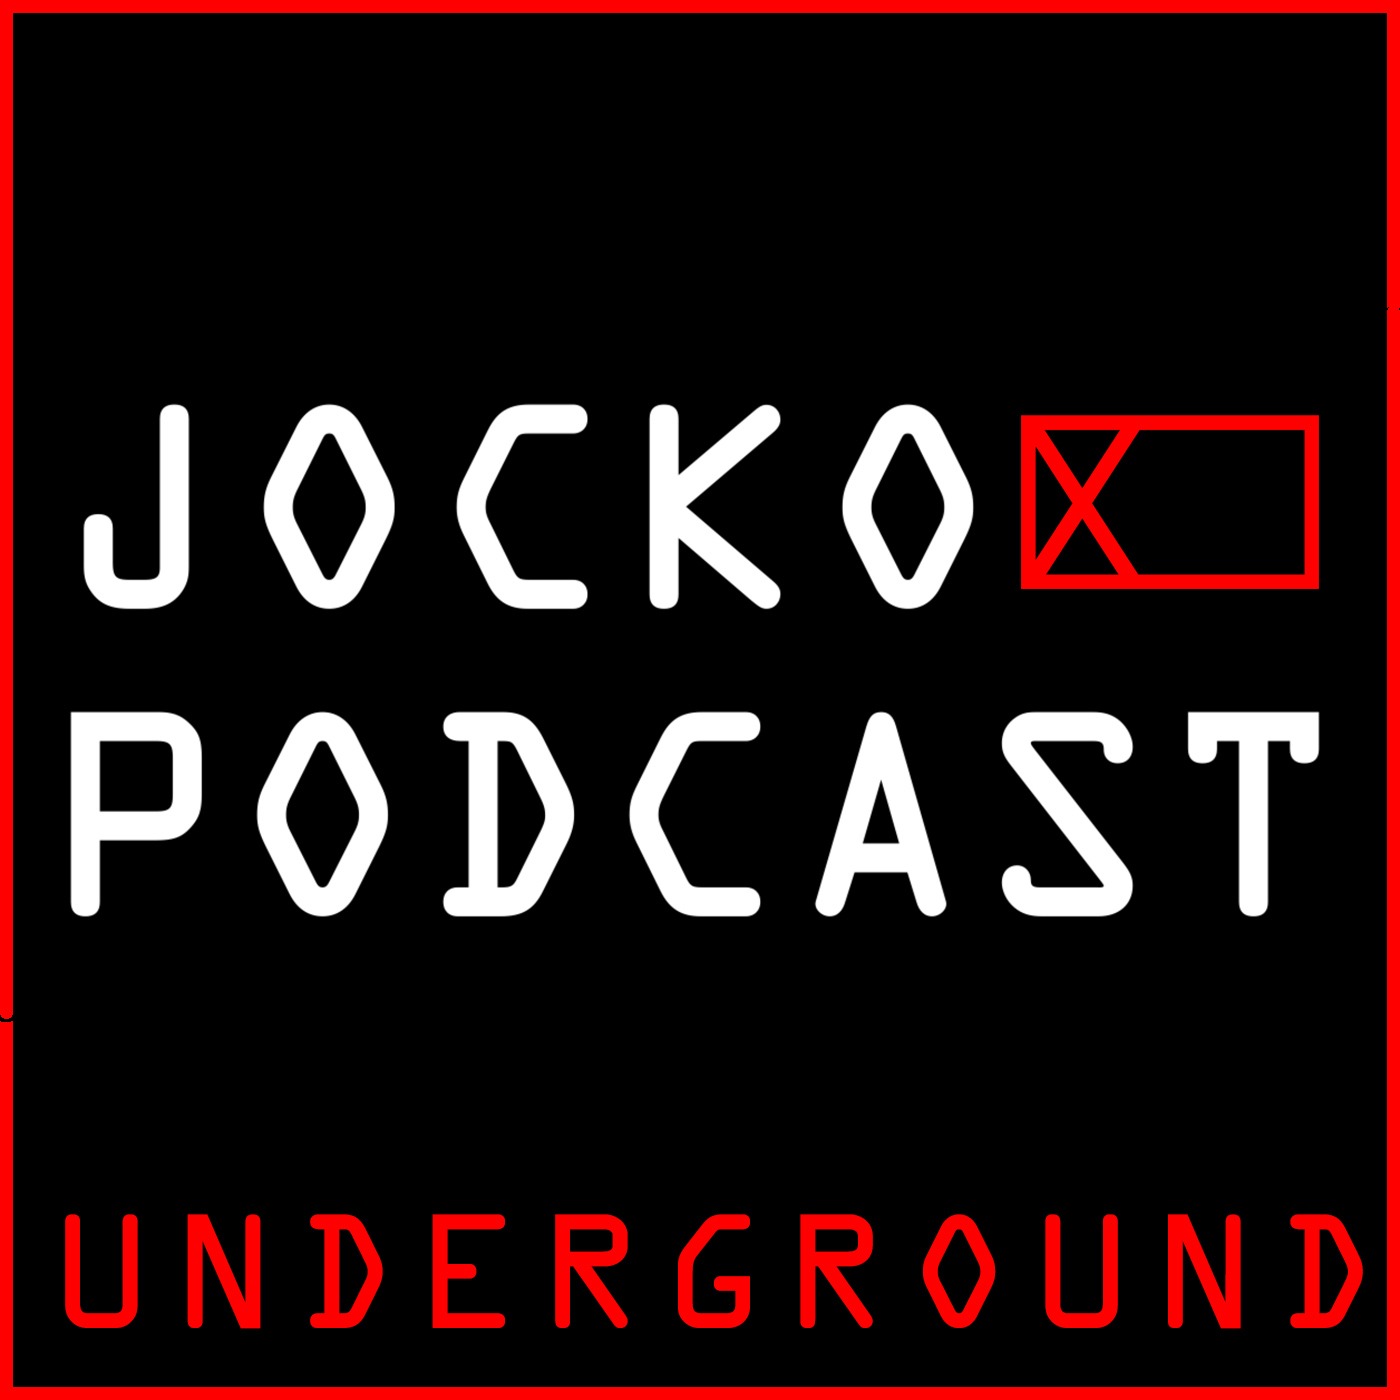 Jocko Underground: Reactance to People, Rules, or Regulations That Threaten or Eliminate Behavior Freedoms.